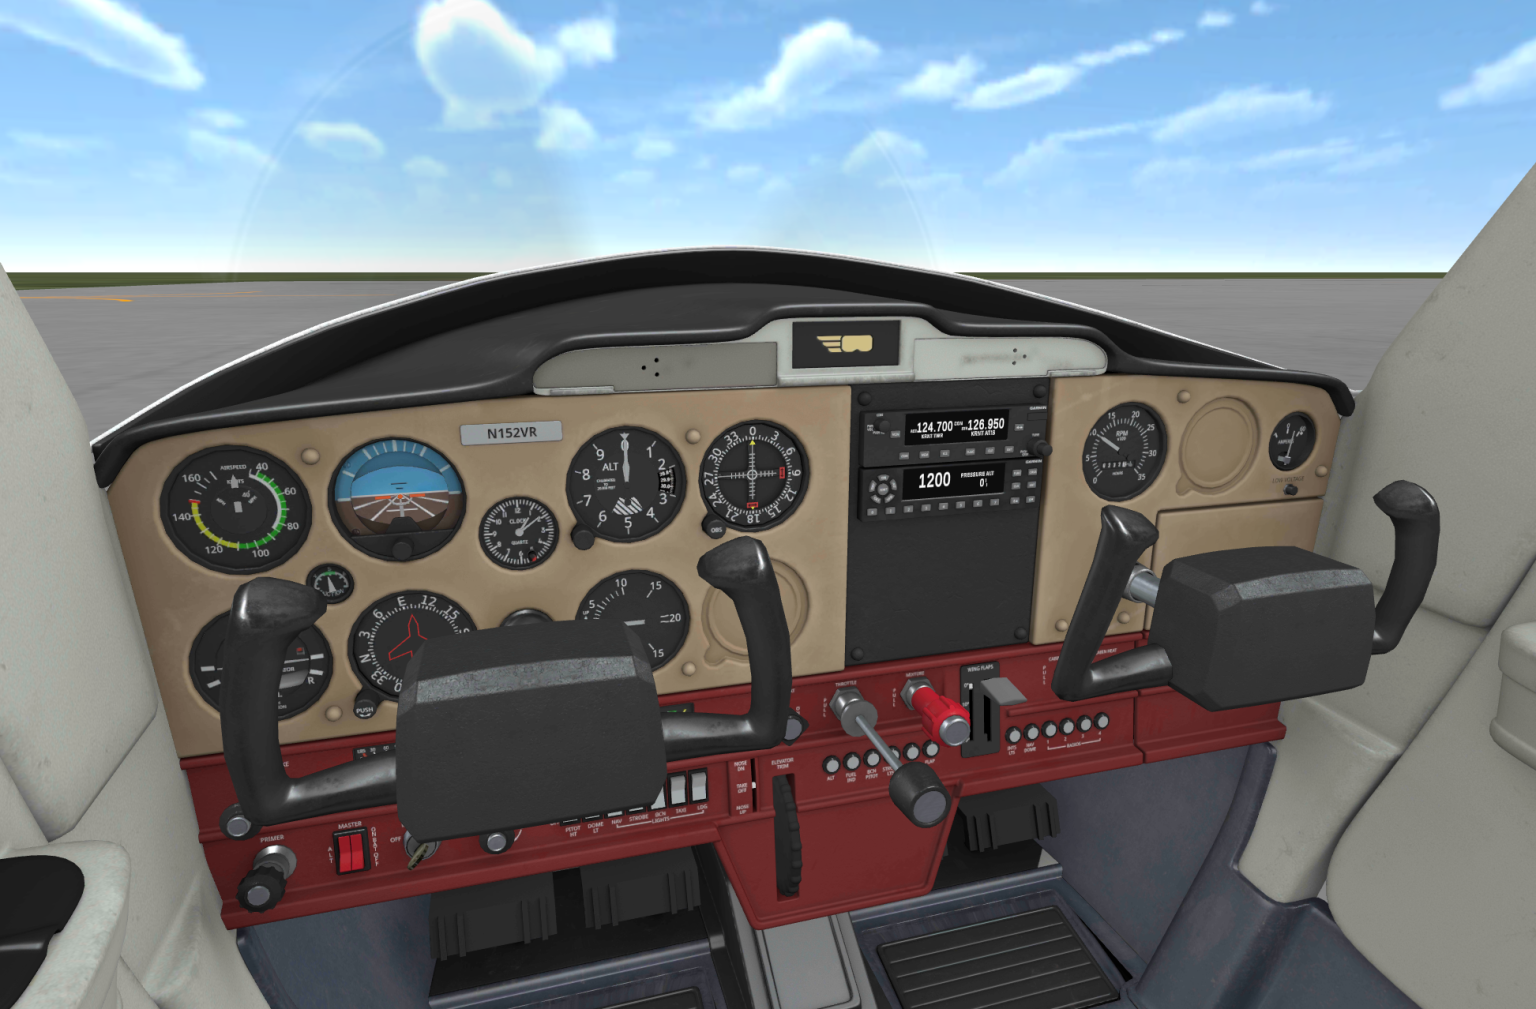 VRPilot - Pilot Training AFM.aero